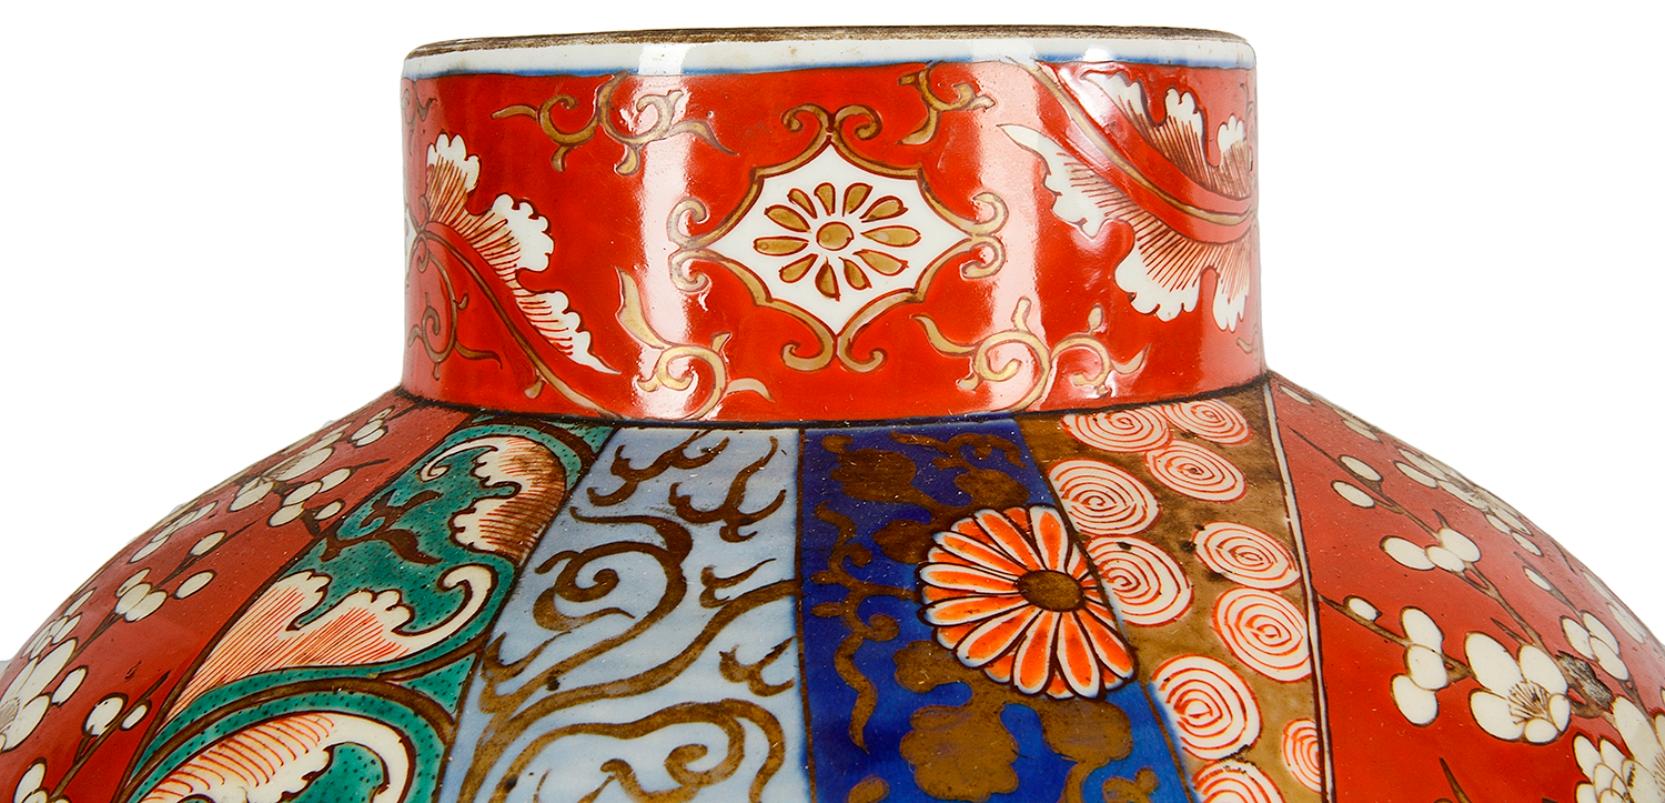 Porcelain Pair of 19th Century Japanese Imari Vases